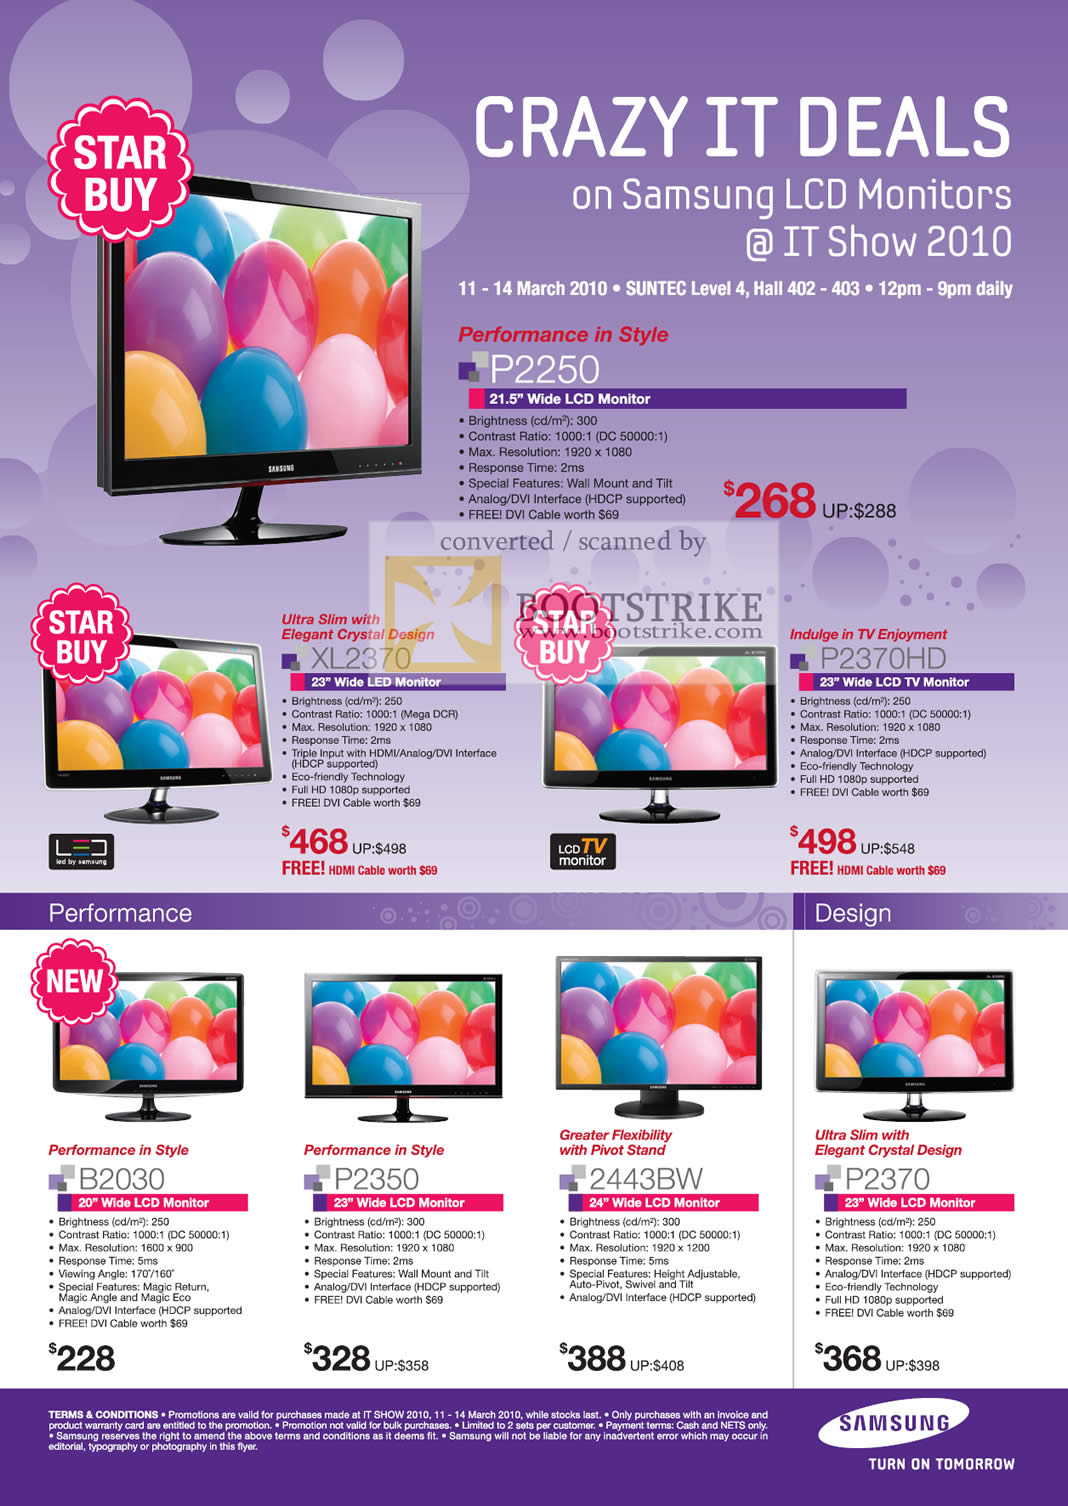 IT Show 2010 price list image brochure of Samsung LCD Monitors P2250 XL2370 P2370HD B2030 P2350 2443BW P2370